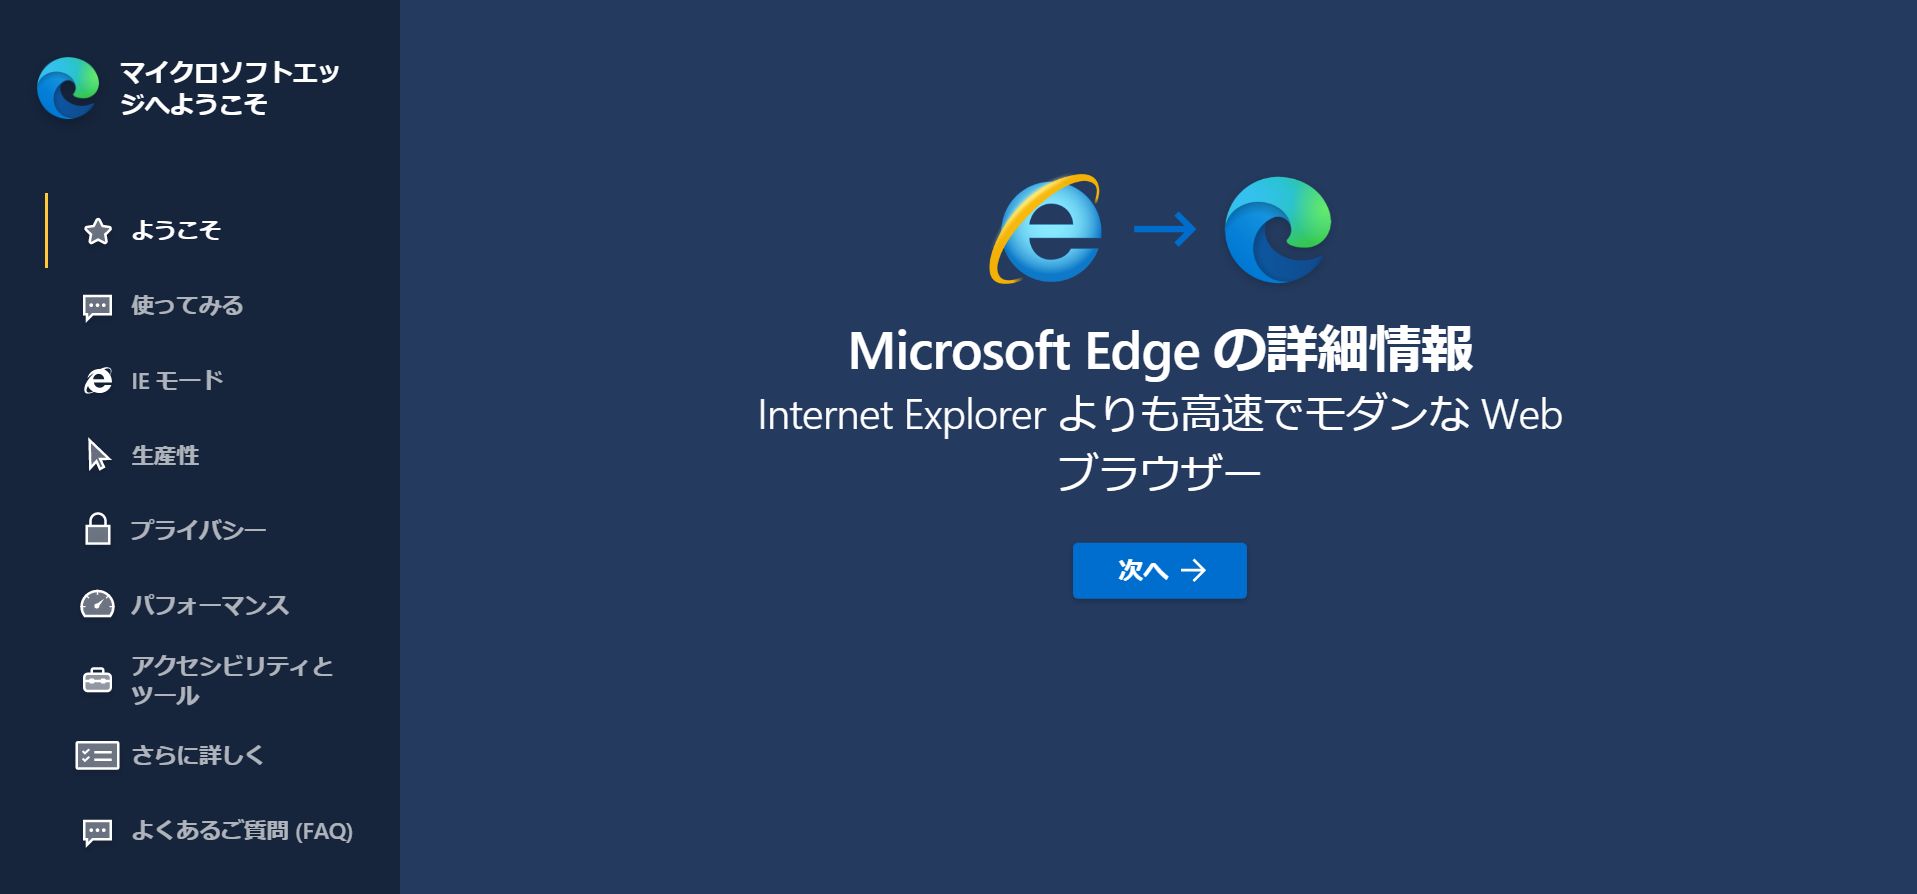 Internet Explorerのサポート終了。Microsoft Edgeへ移行